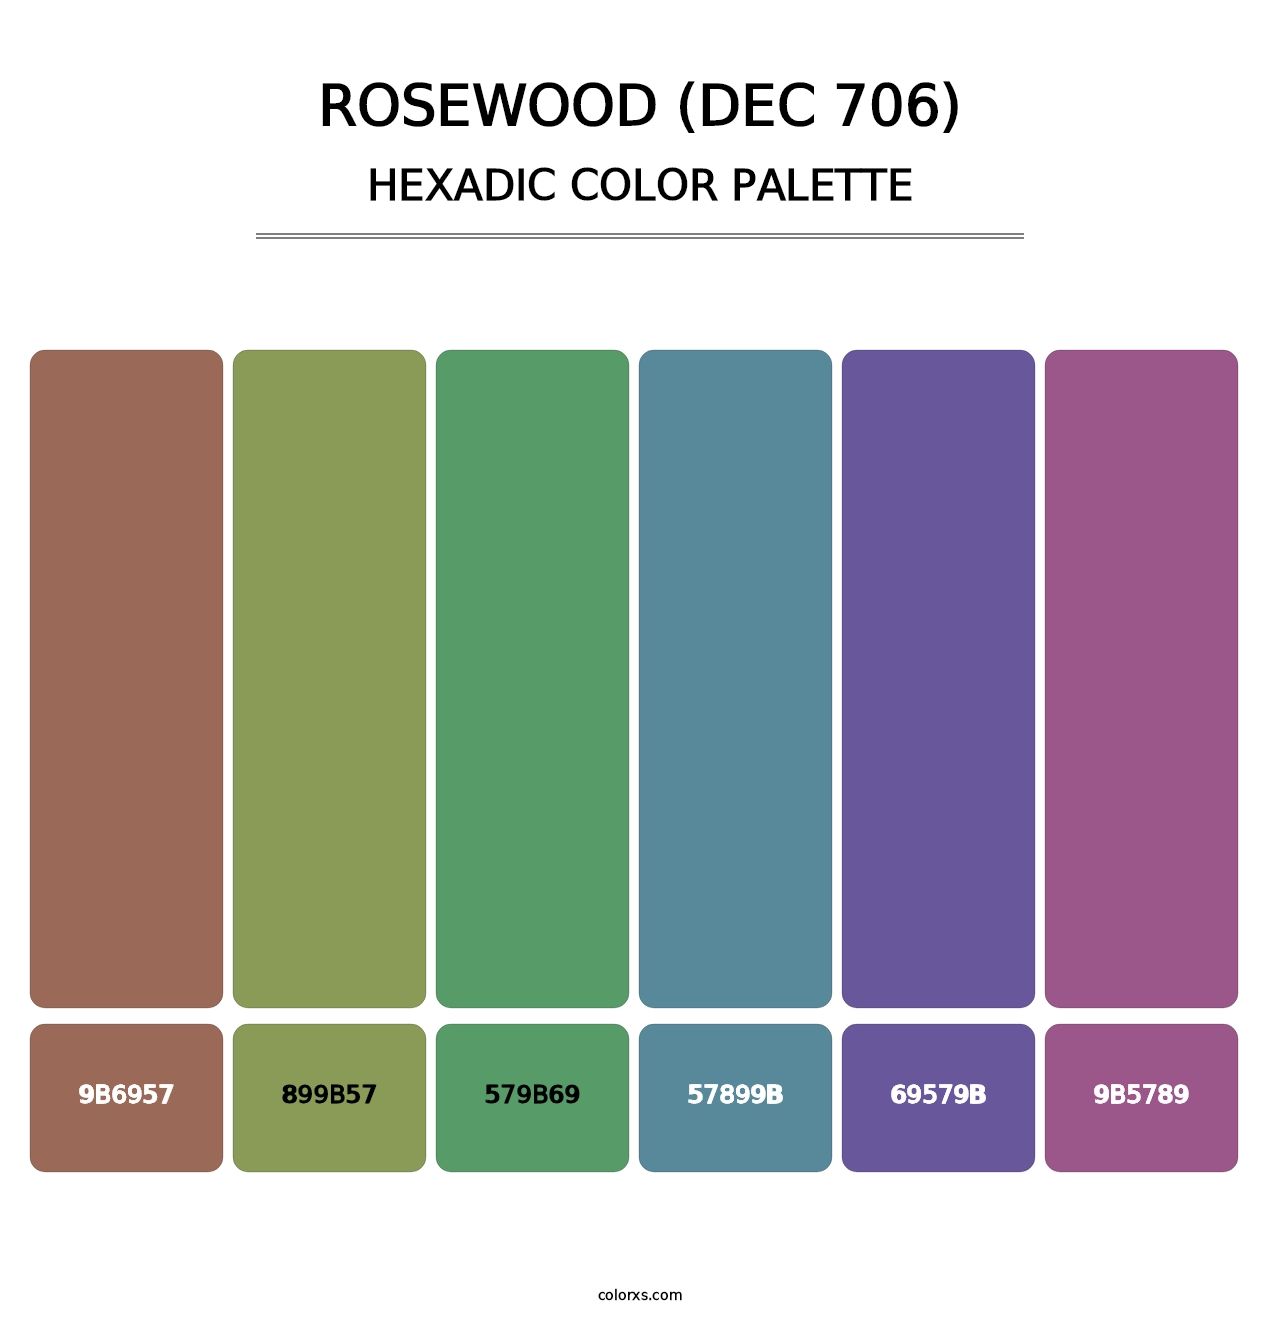 Rosewood (DEC 706) - Hexadic Color Palette